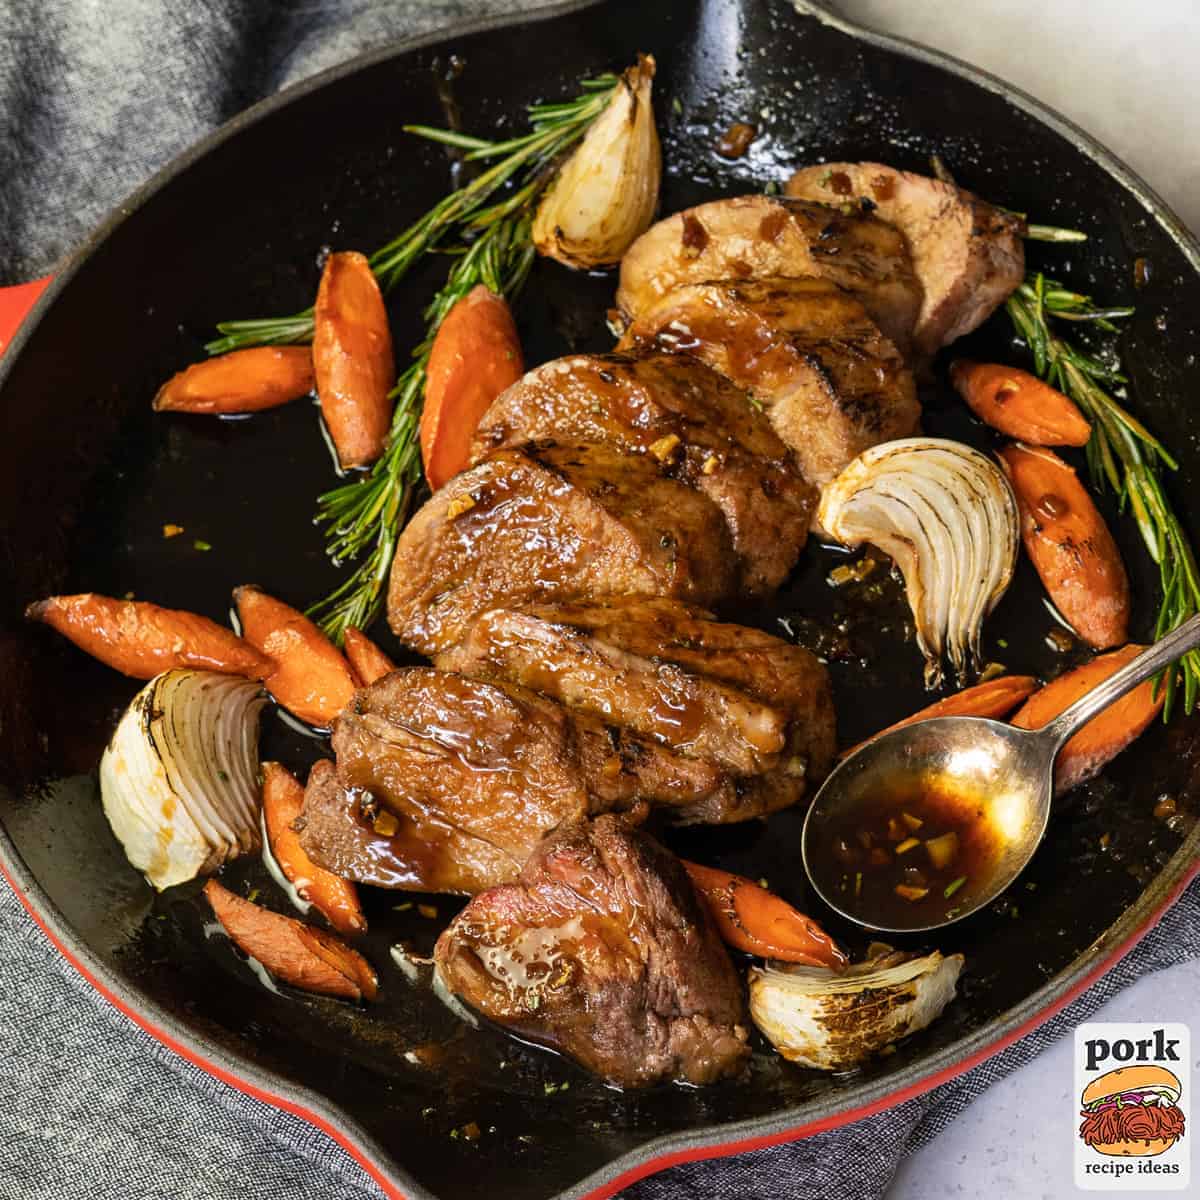 sliced roast pork tenderloin in a pan with garlic, carrots, and herbs